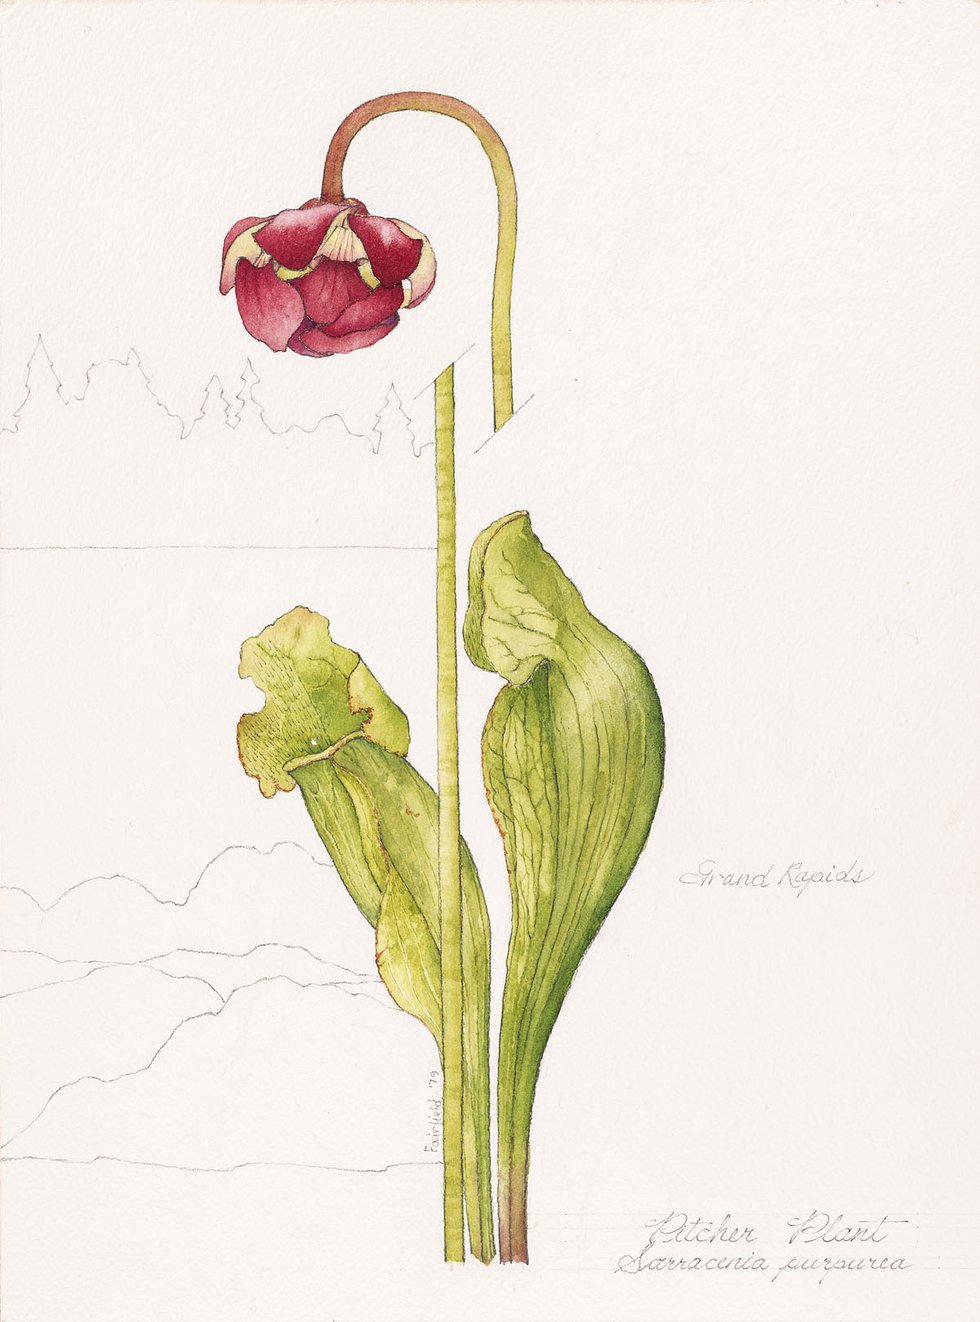 Linda Fairfield Stechesen, botanical drawings (pitcher plant), 1977-2007